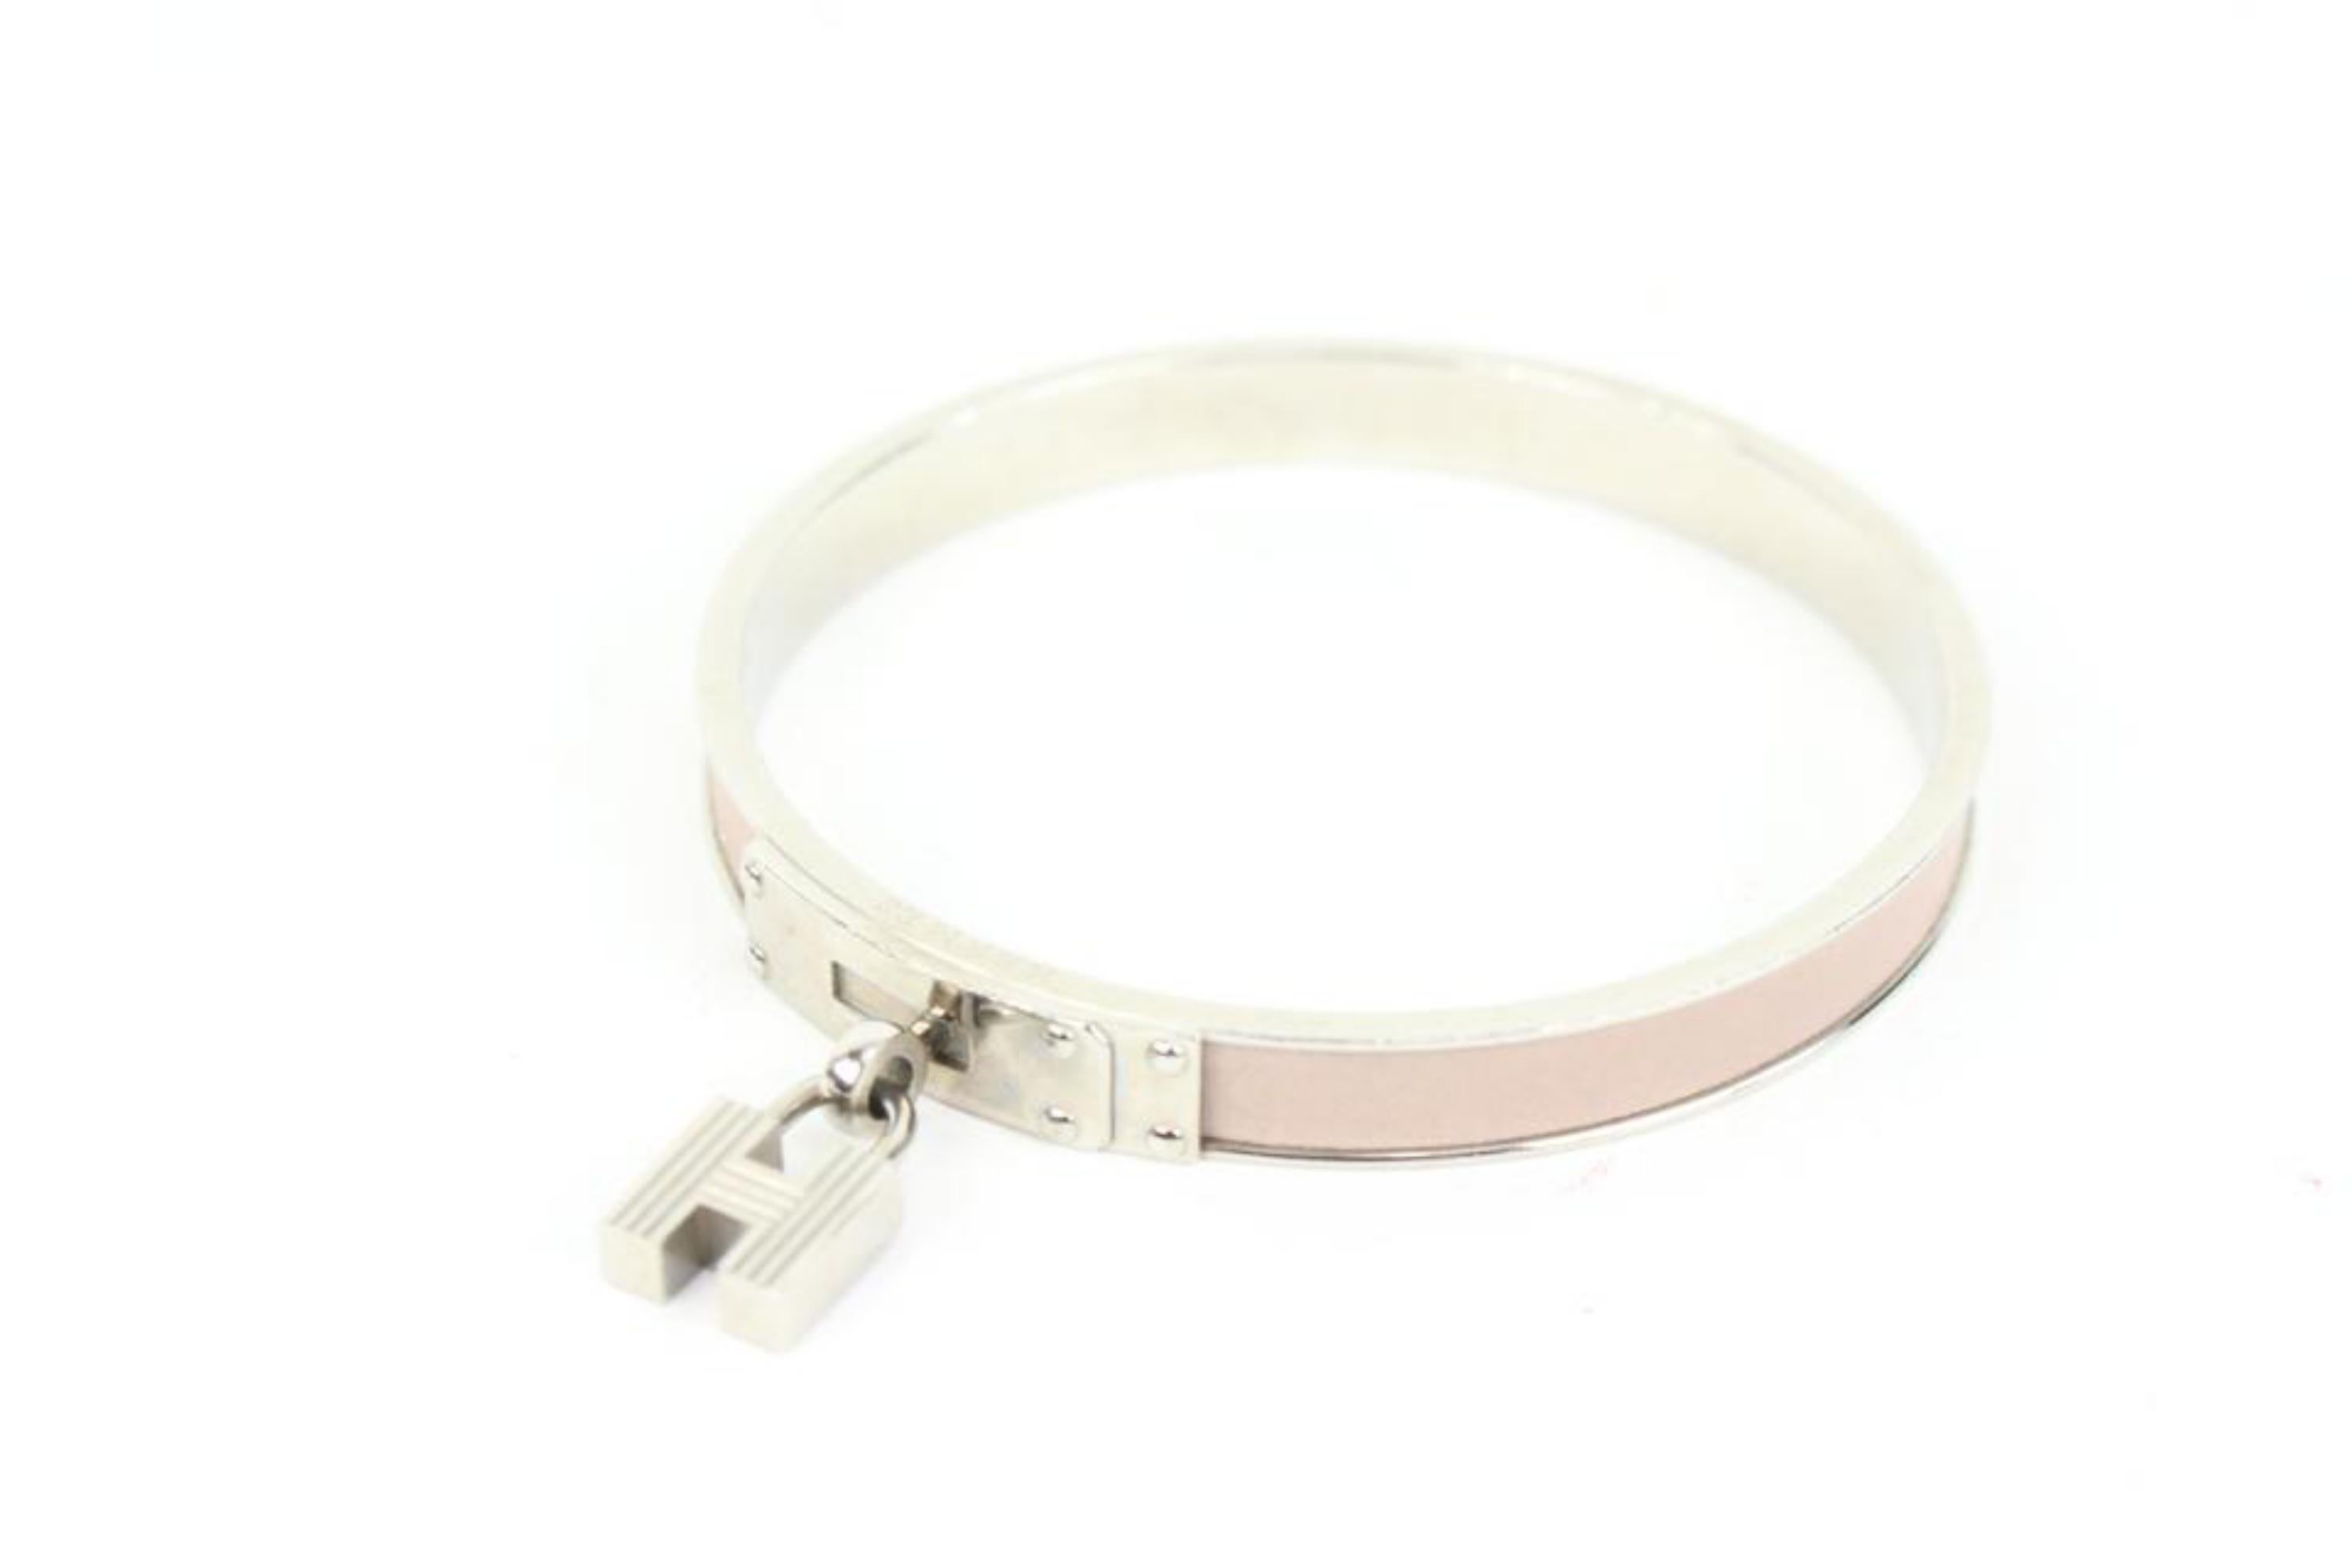 Hermès Silver x Baby Pink Kelly H Cadena Bangle Bracelet 41h62
Made In: France
Measurements: Length:  2.5